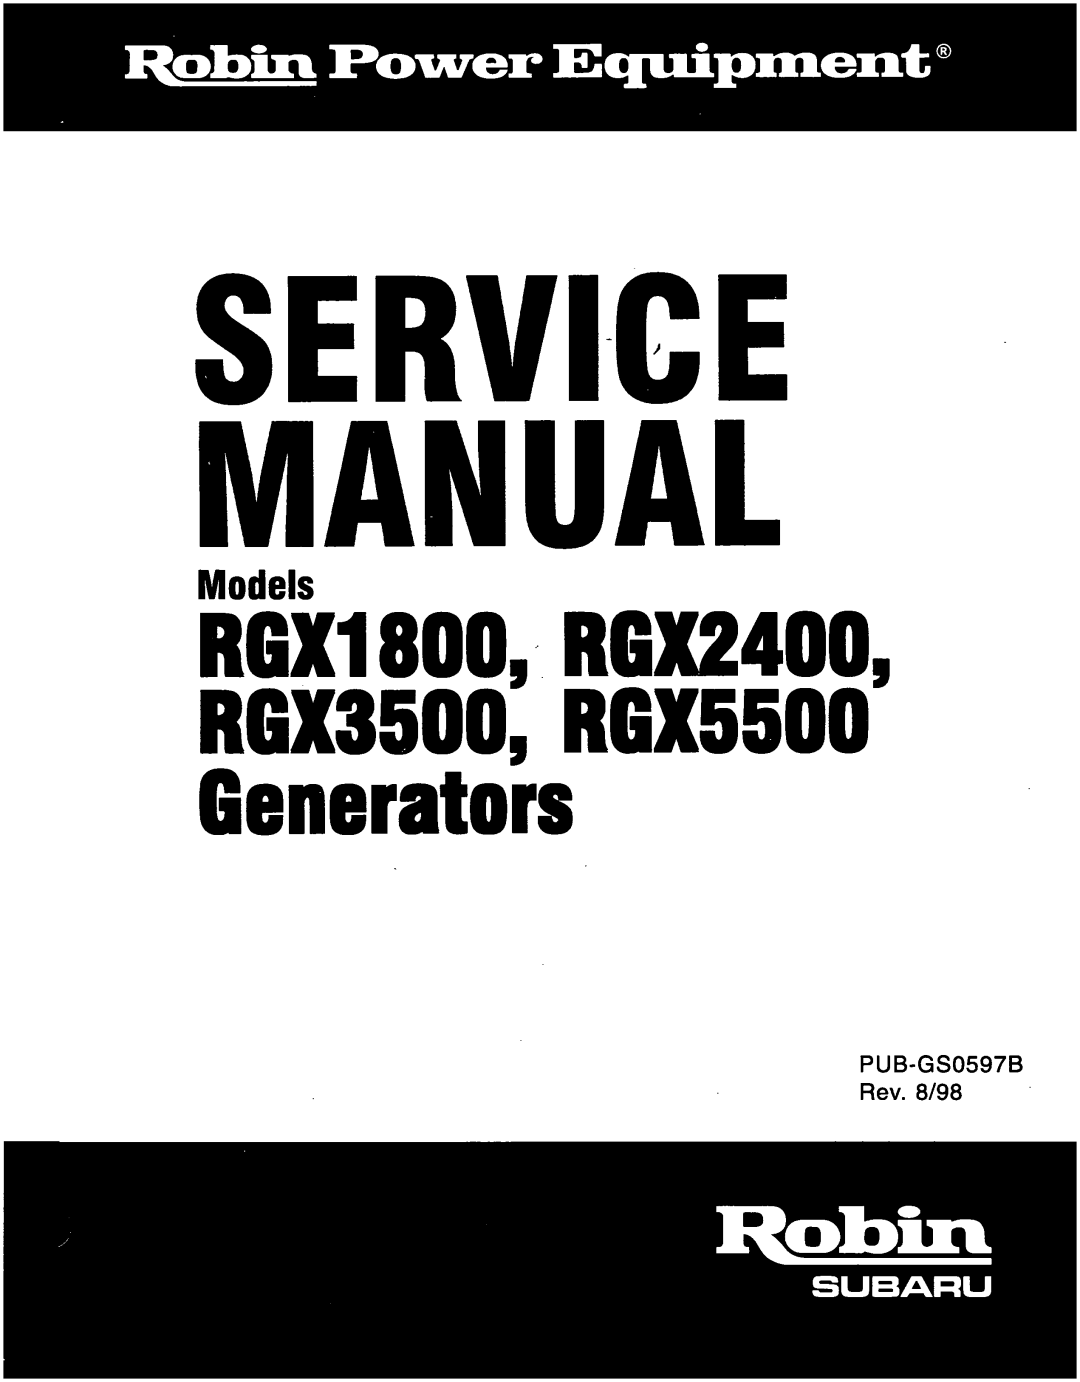 Subaru Robin Power Products manual Manual, Models, PUB-GS0597B Rev, RGXI800,*RGX2400,. RGX3500,RGX5500 Generators 